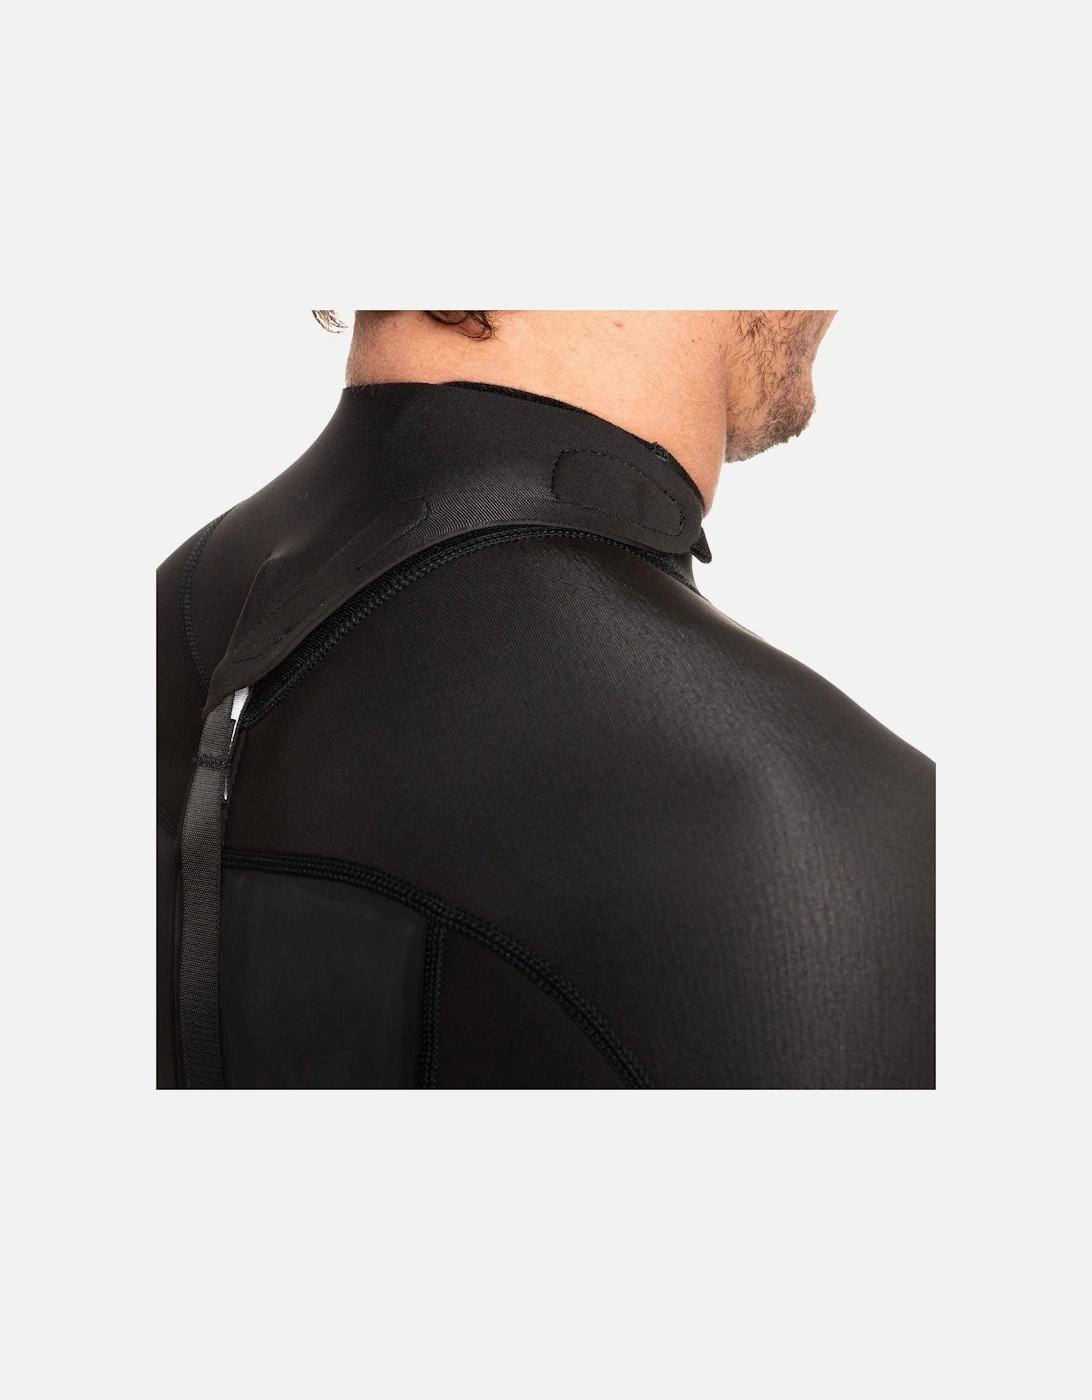 Mens 2/2mm Prologue Short Sleeve Back Zip Wetsuit - Black